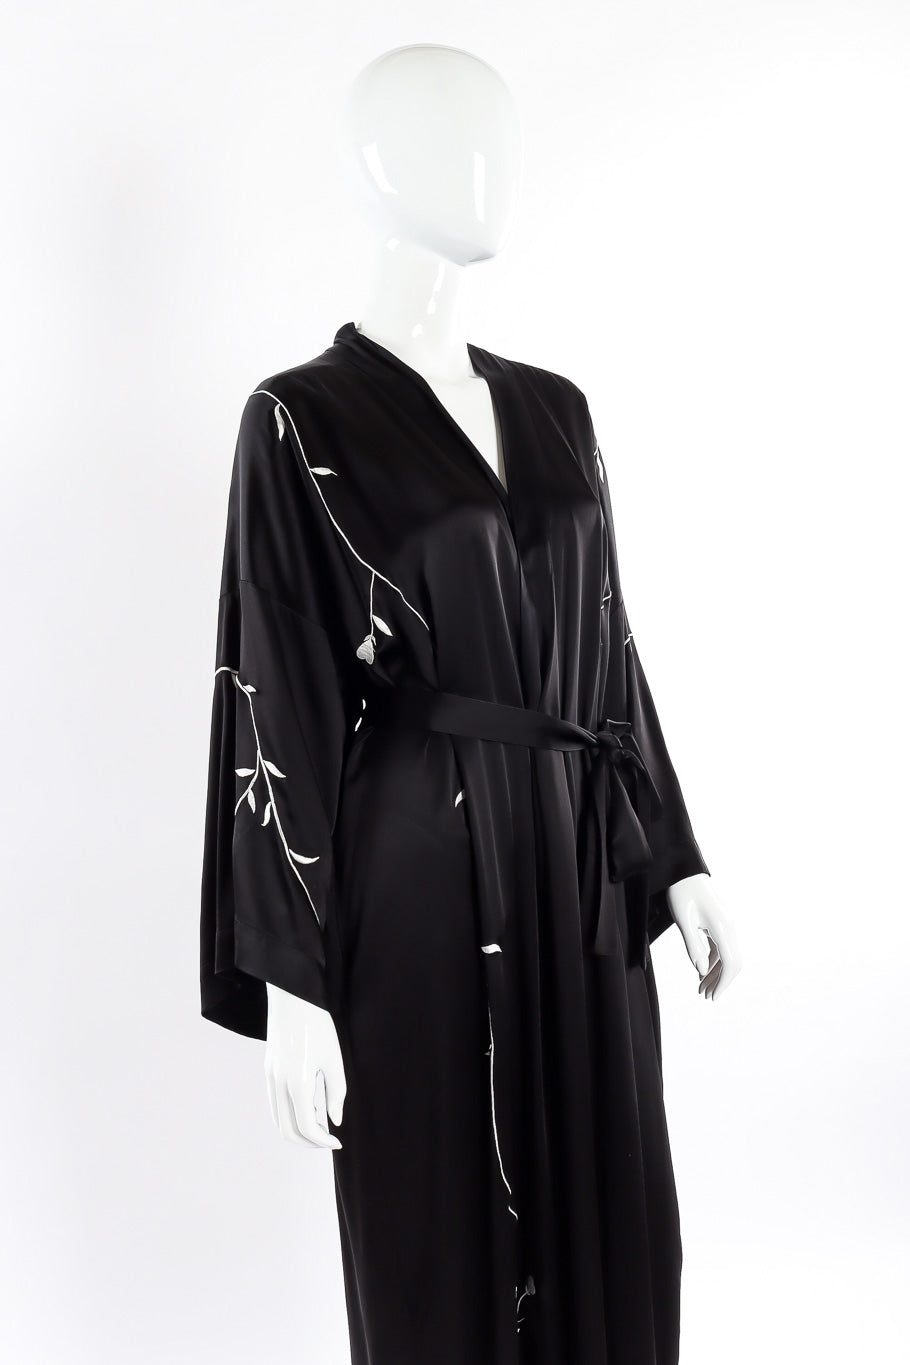 embroidered robe by Donna Karan Intimates mannequin side @recessla